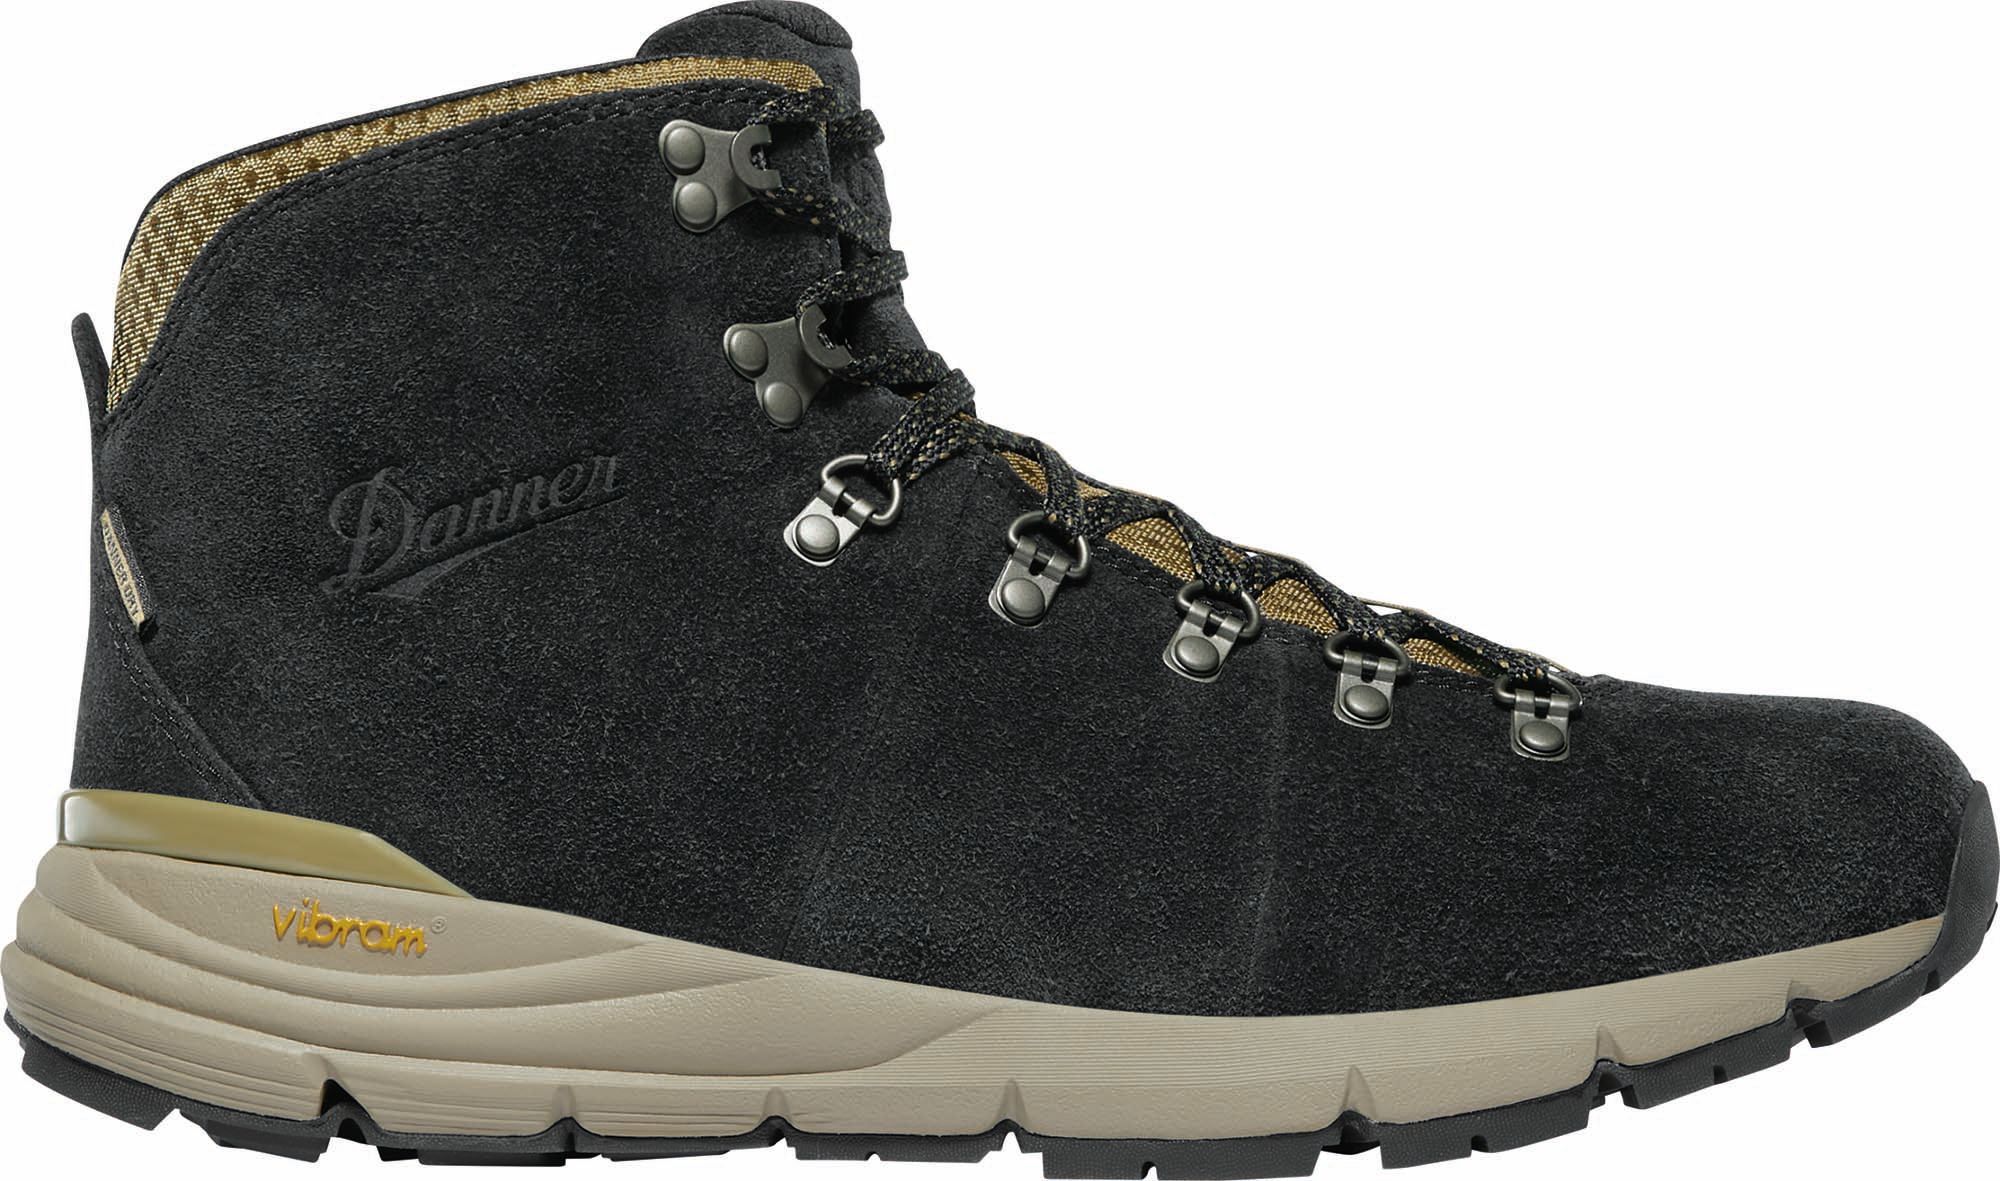 Photos - Trekking Shoes Danner Men's Mountain 600 4.5" Waterproof Hiking Boots, Size 8.5, Black/Kh 